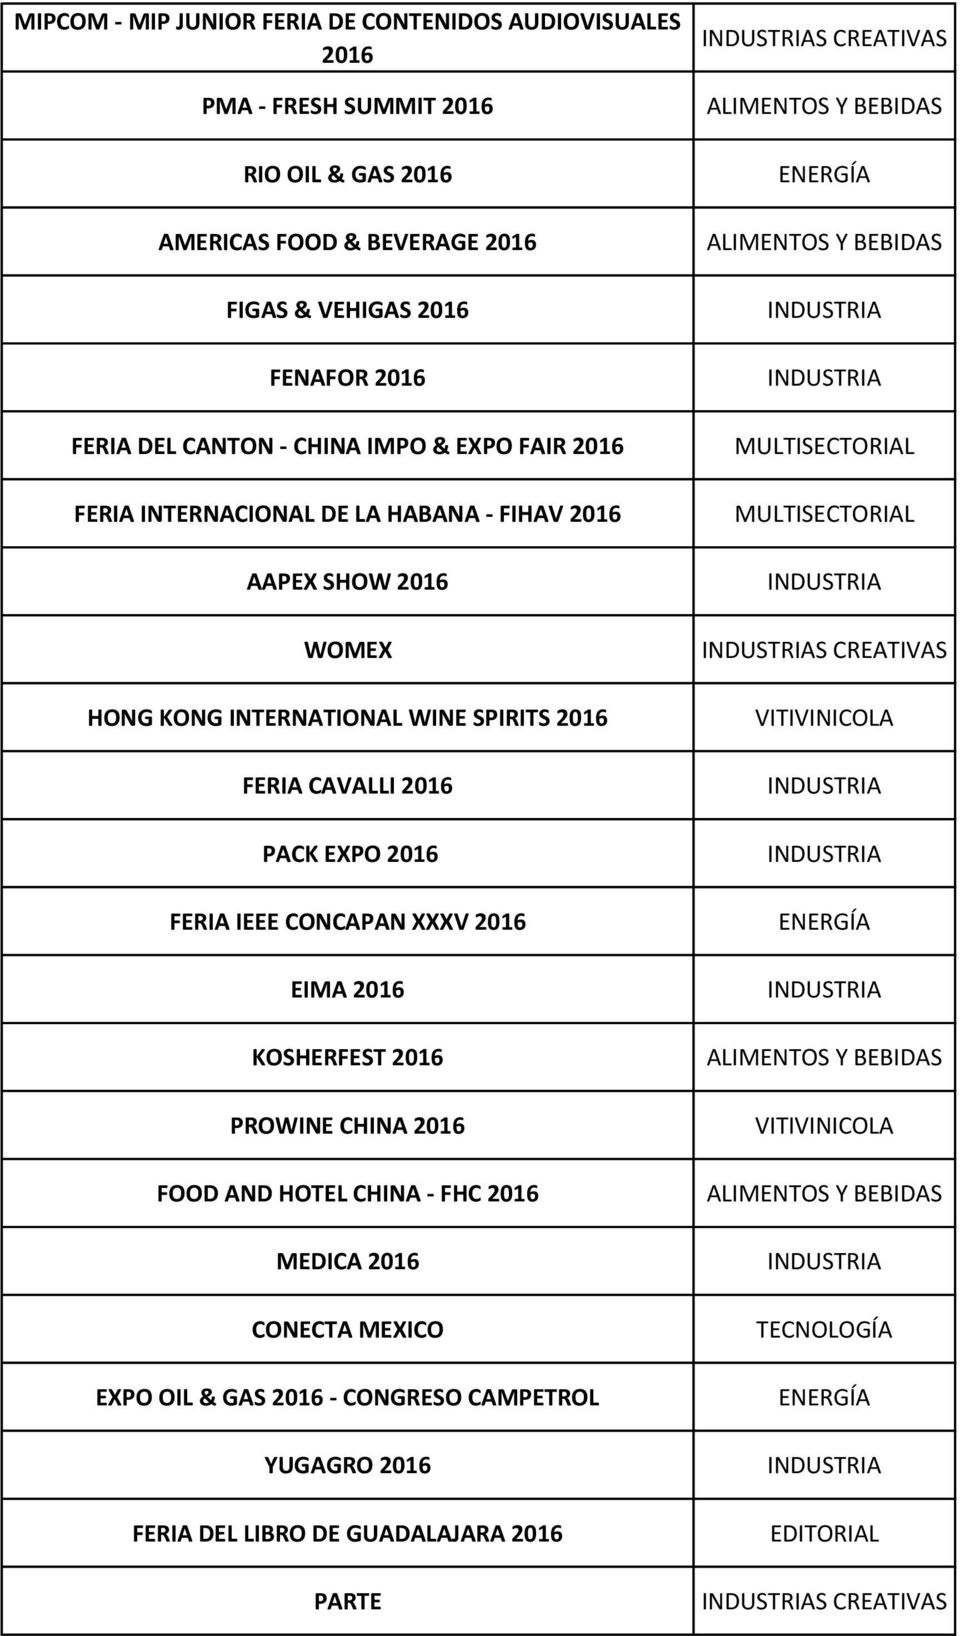 EXPO 2016 FERIA IEEE CONCAPAN XXXV 2016 EIMA 2016 KOSHERFEST 2016 PROWINE CHINA 2016 FOOD AND HOTEL CHINA - FHC 2016 MEDICA 2016 CONECTA MEXICO EXPO OIL & GAS 2016 - CONGRESO